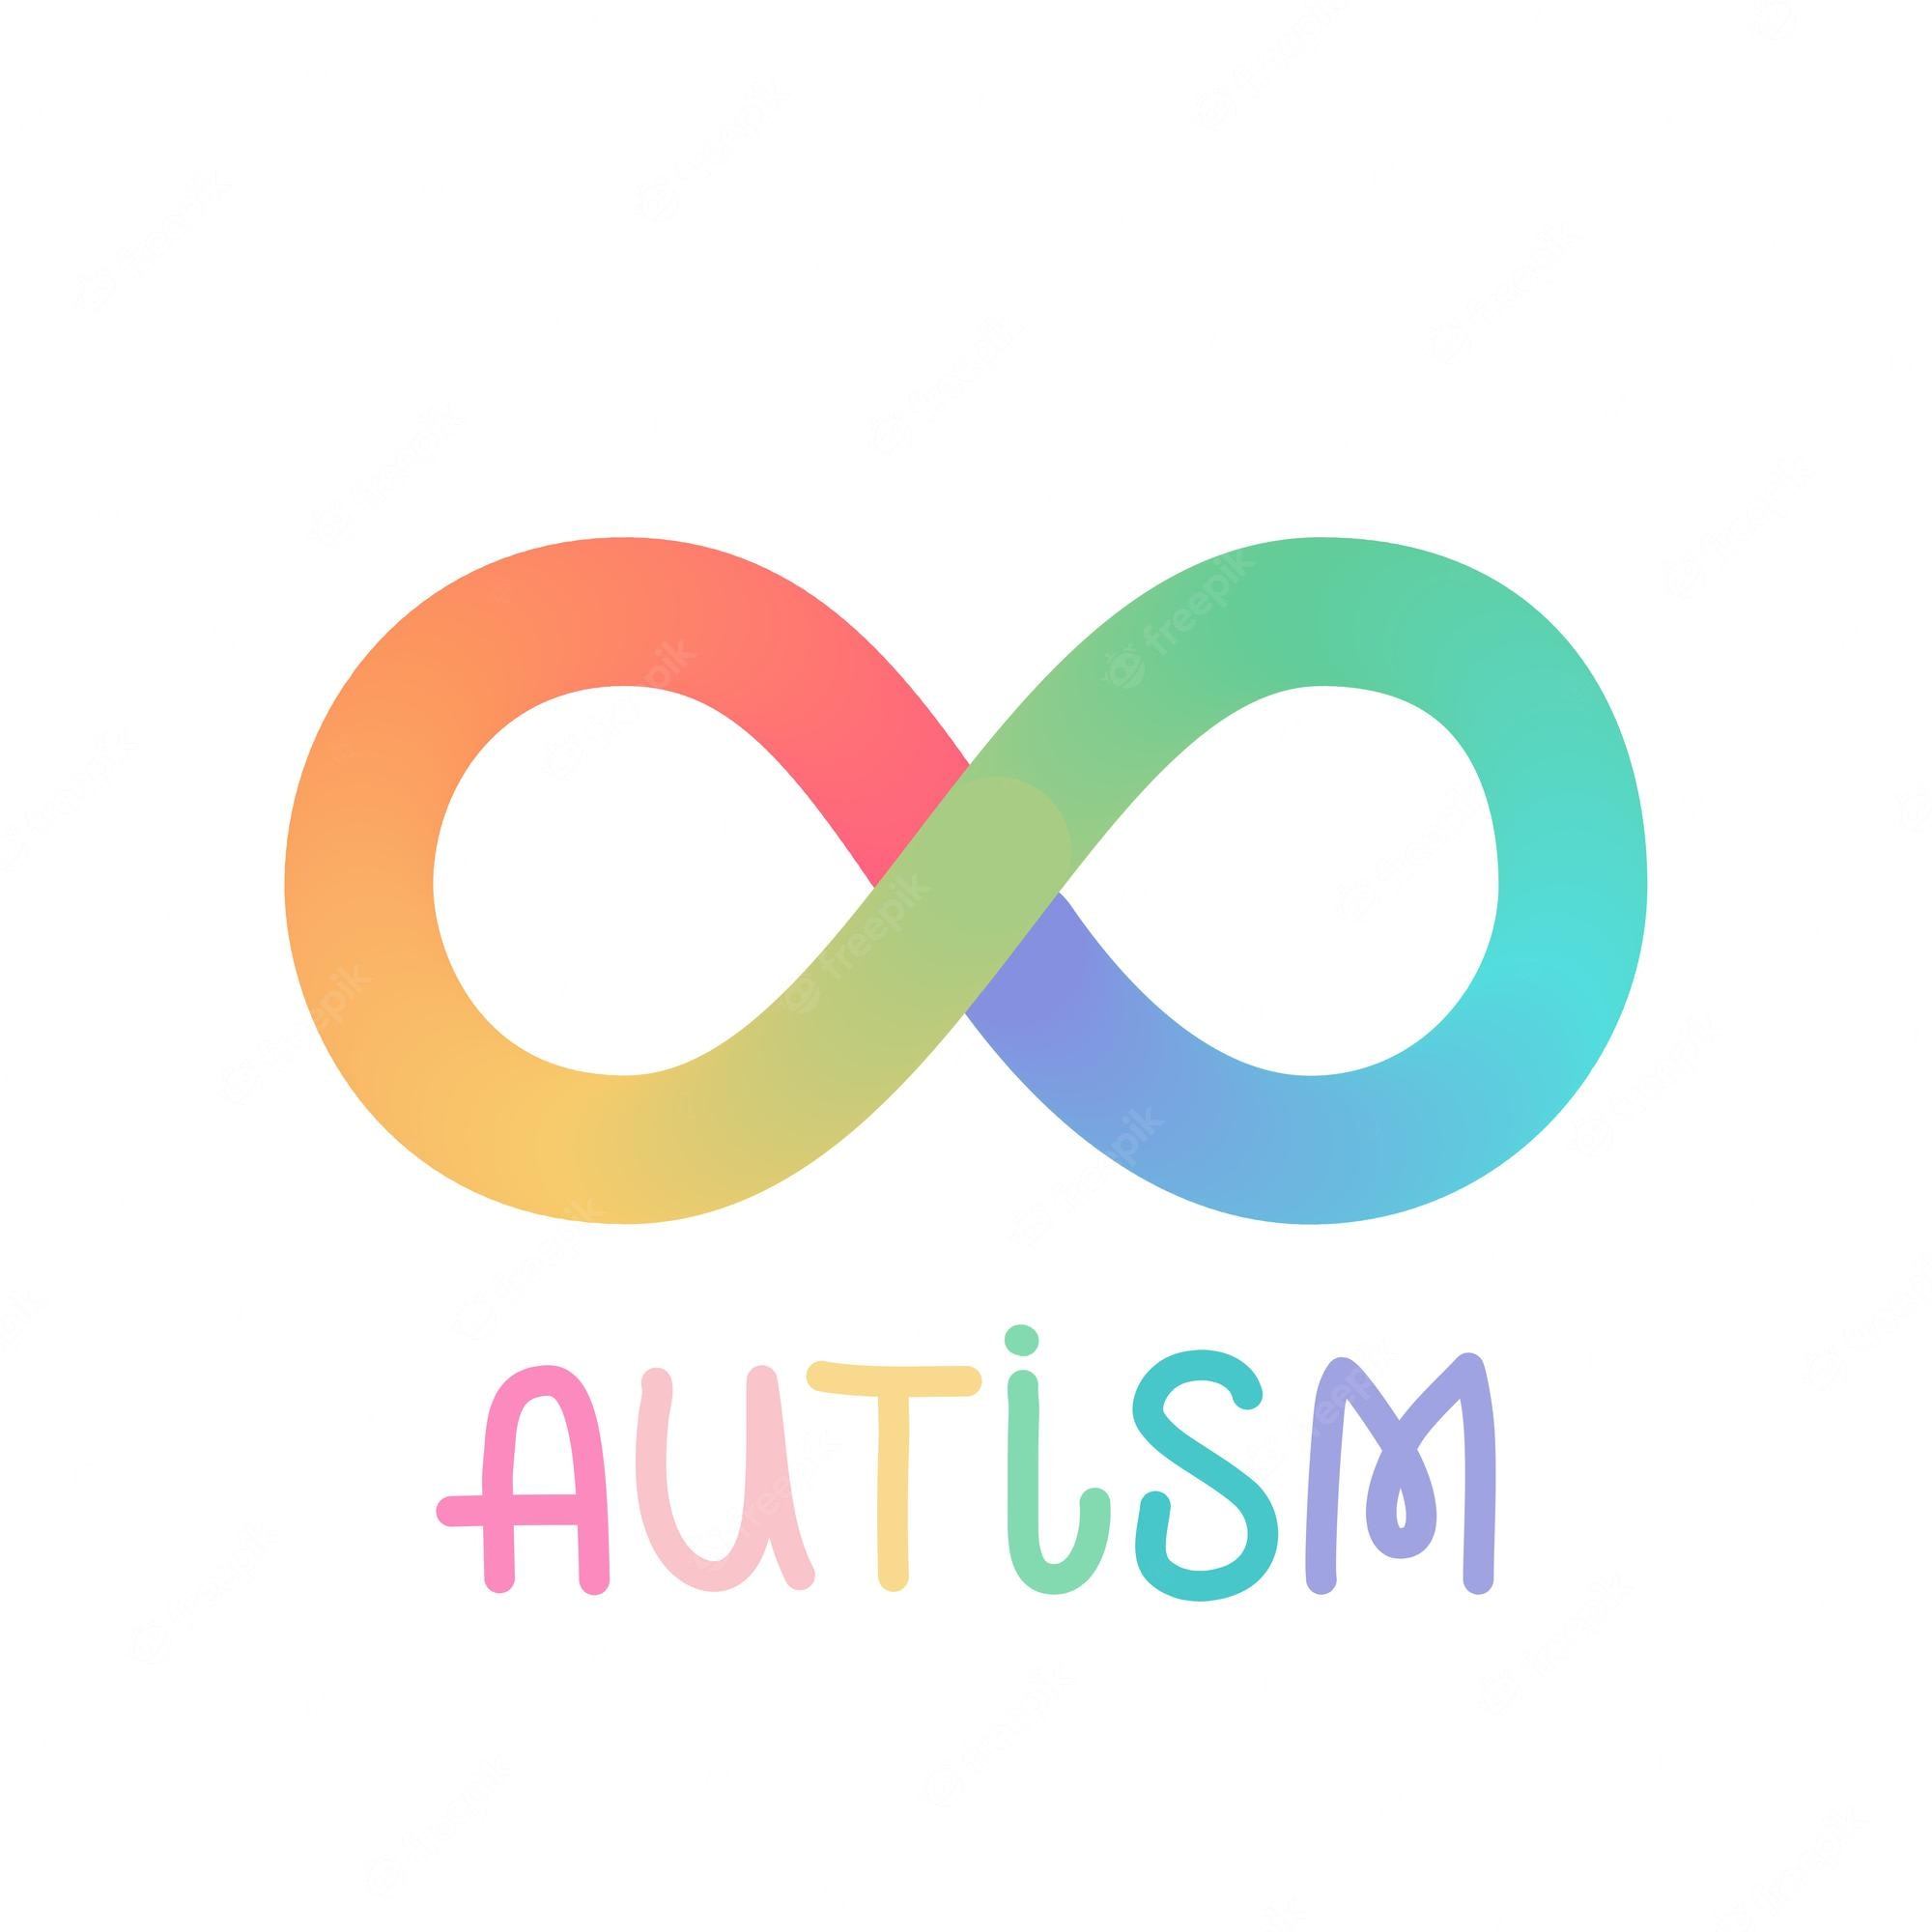 Autism - Year 6 - Quizizz